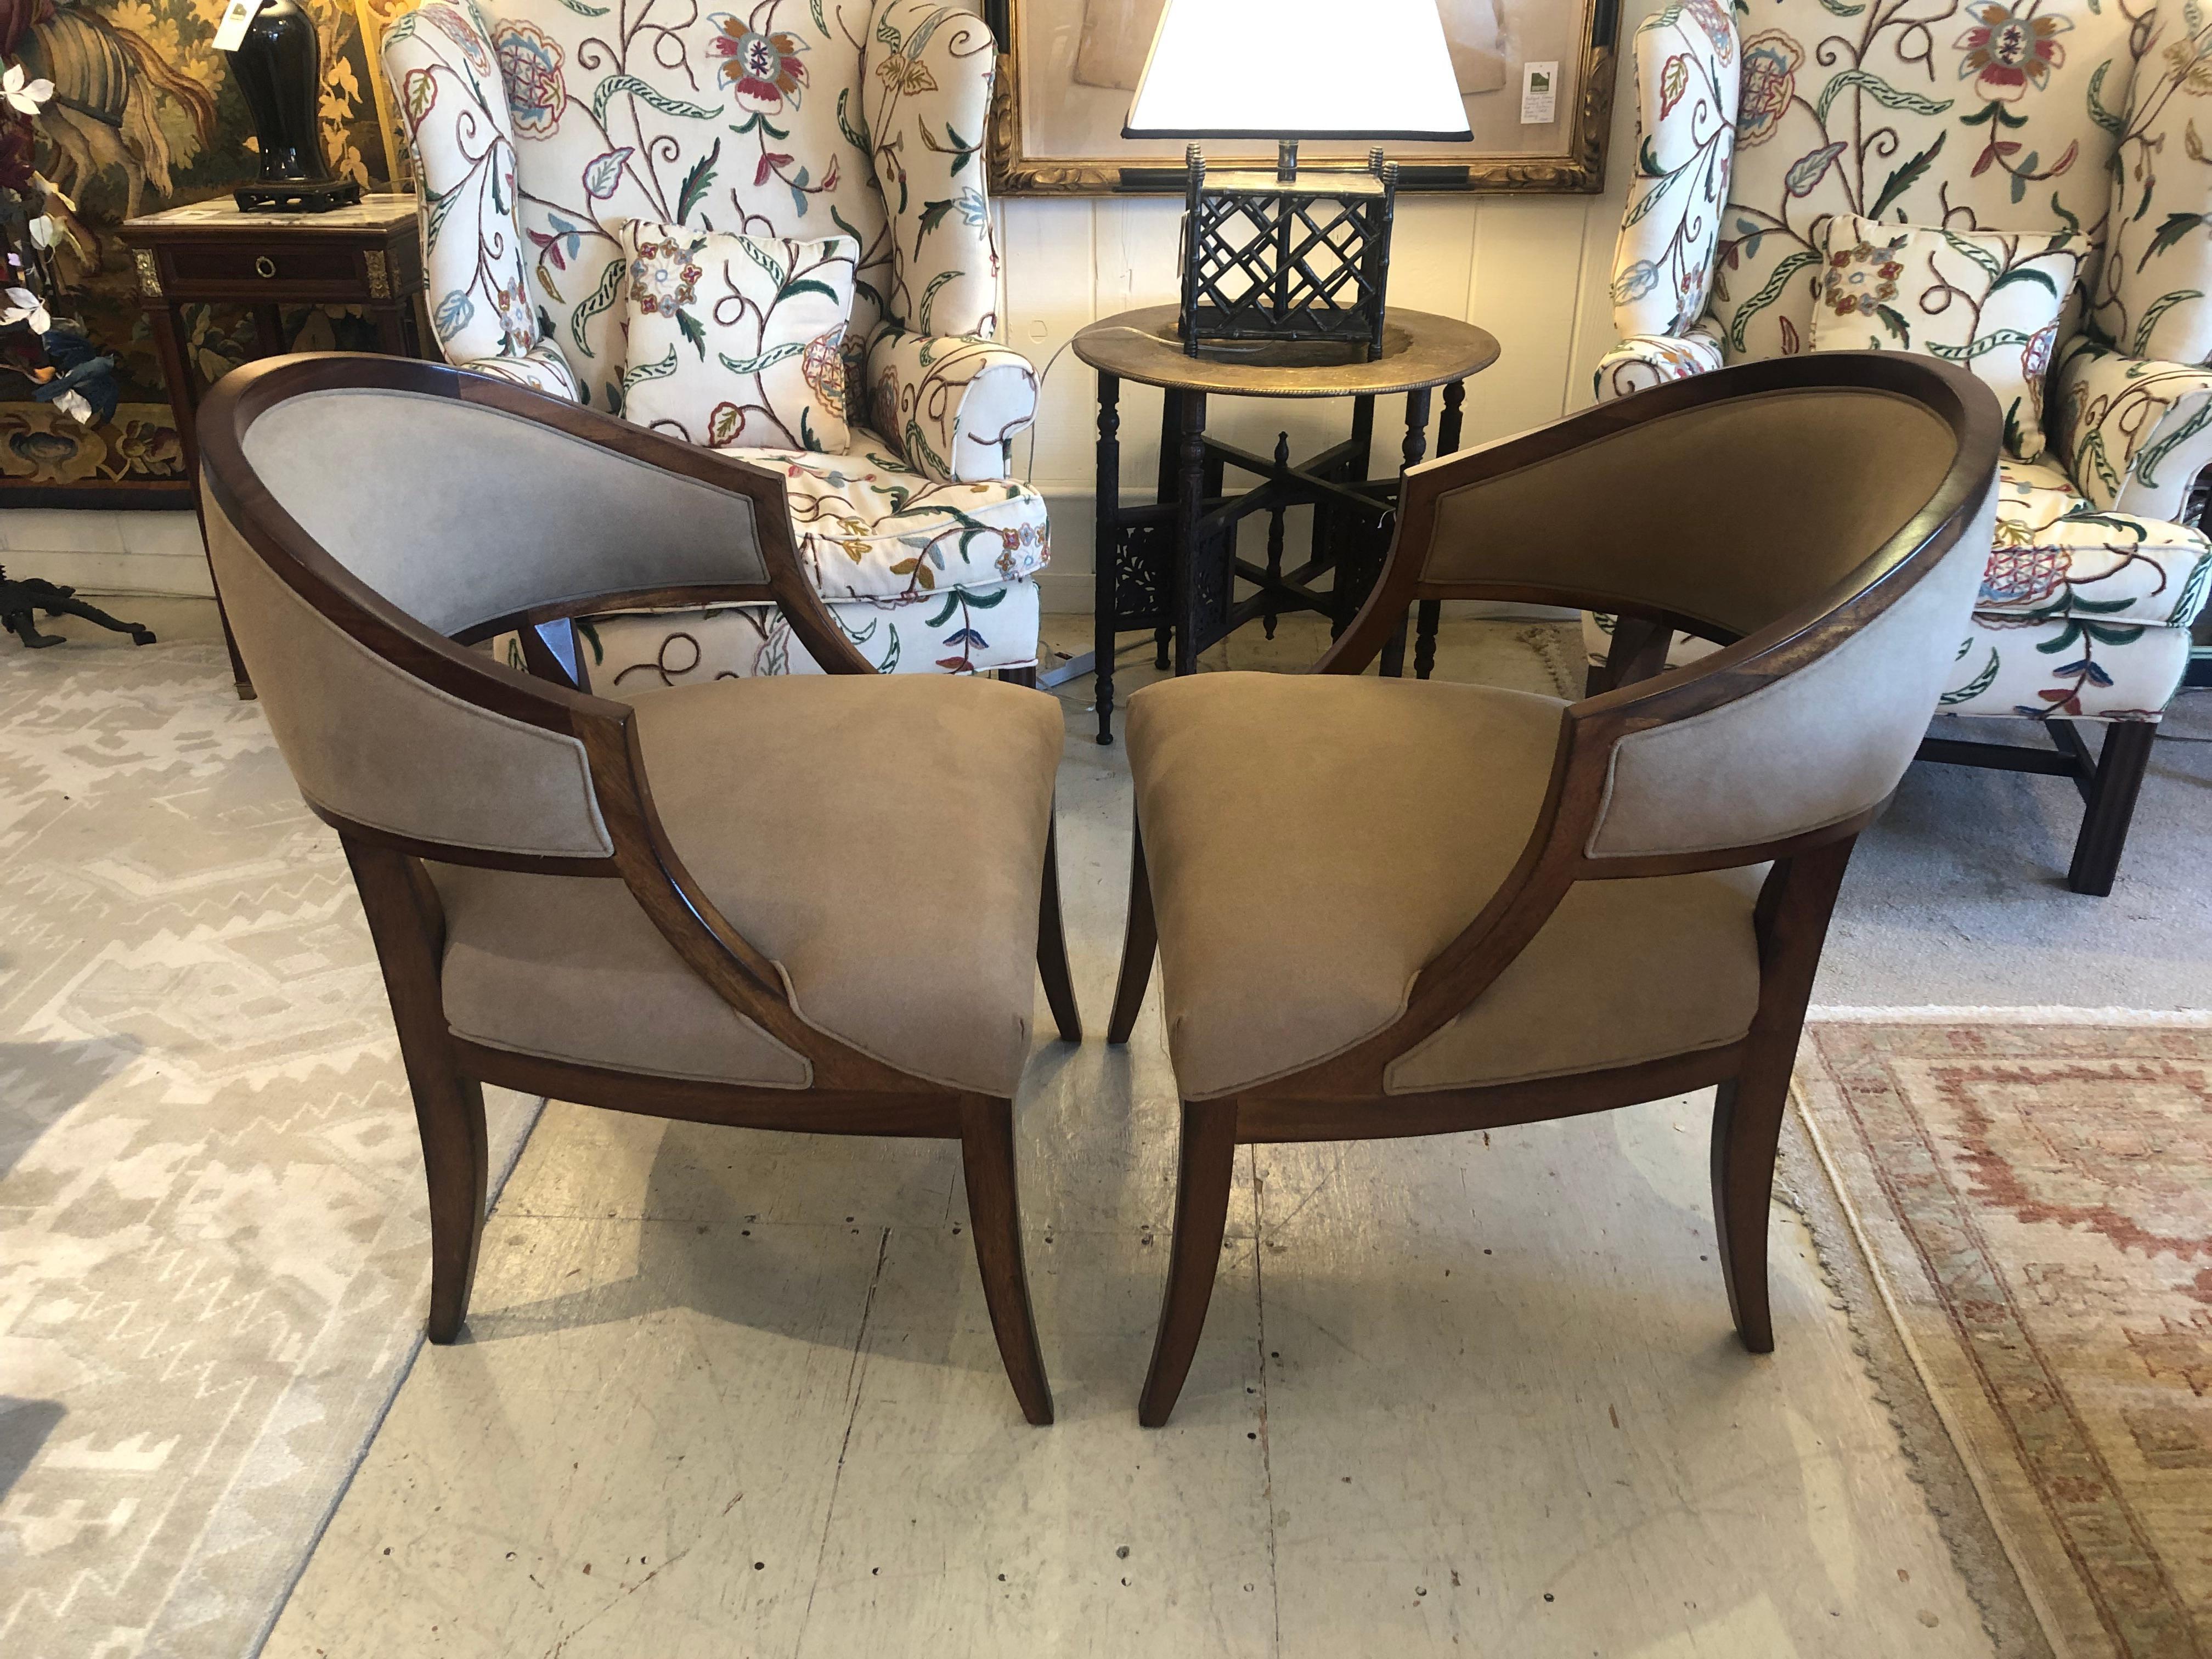 Upholstery Debonair Pair of Faux Suede or Camelhair Club Chairs